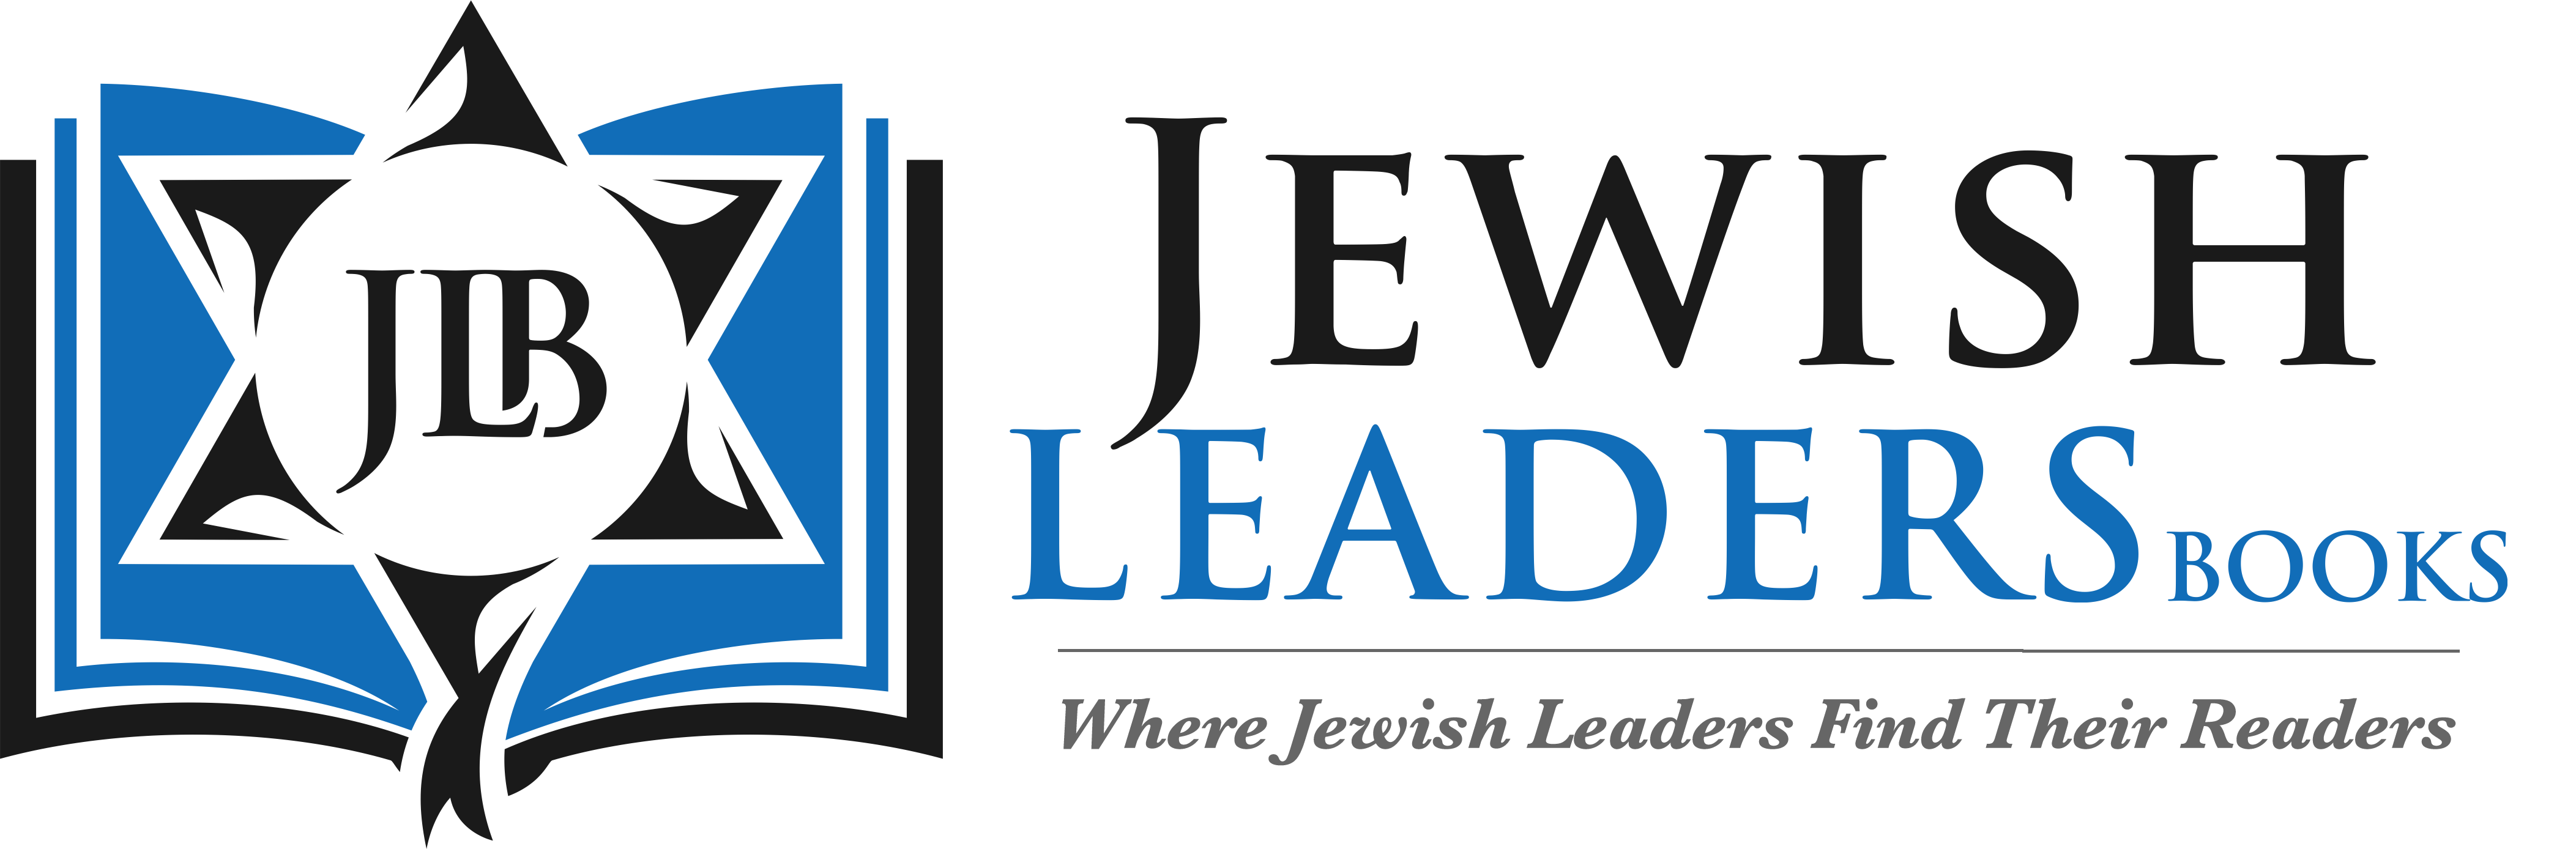 Jewish Leaders Books